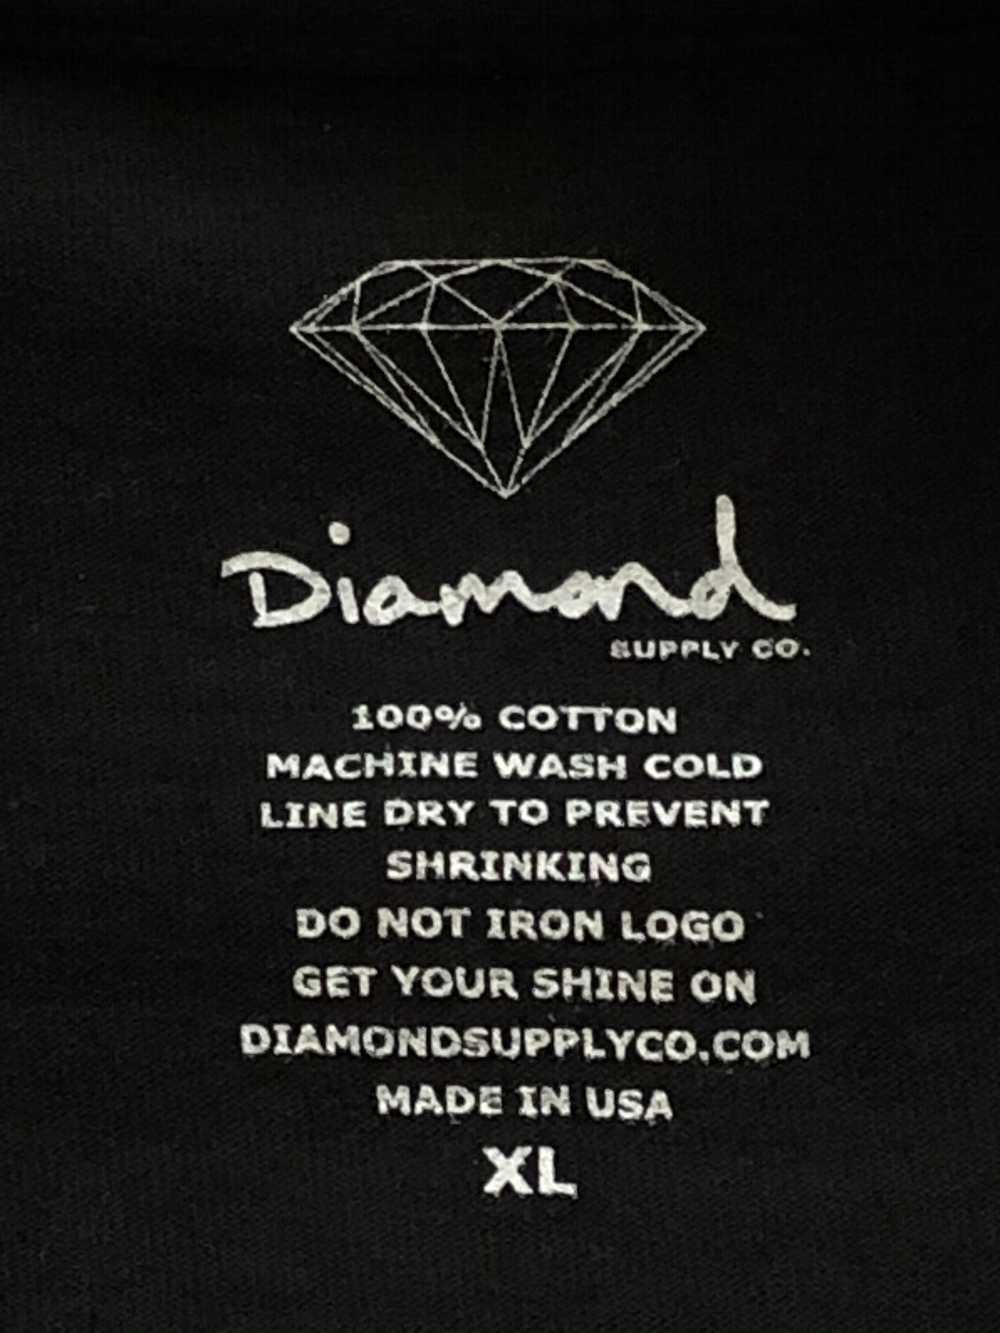 Diamond Supply Co Diamond Supply Co. T-Shirt - image 3